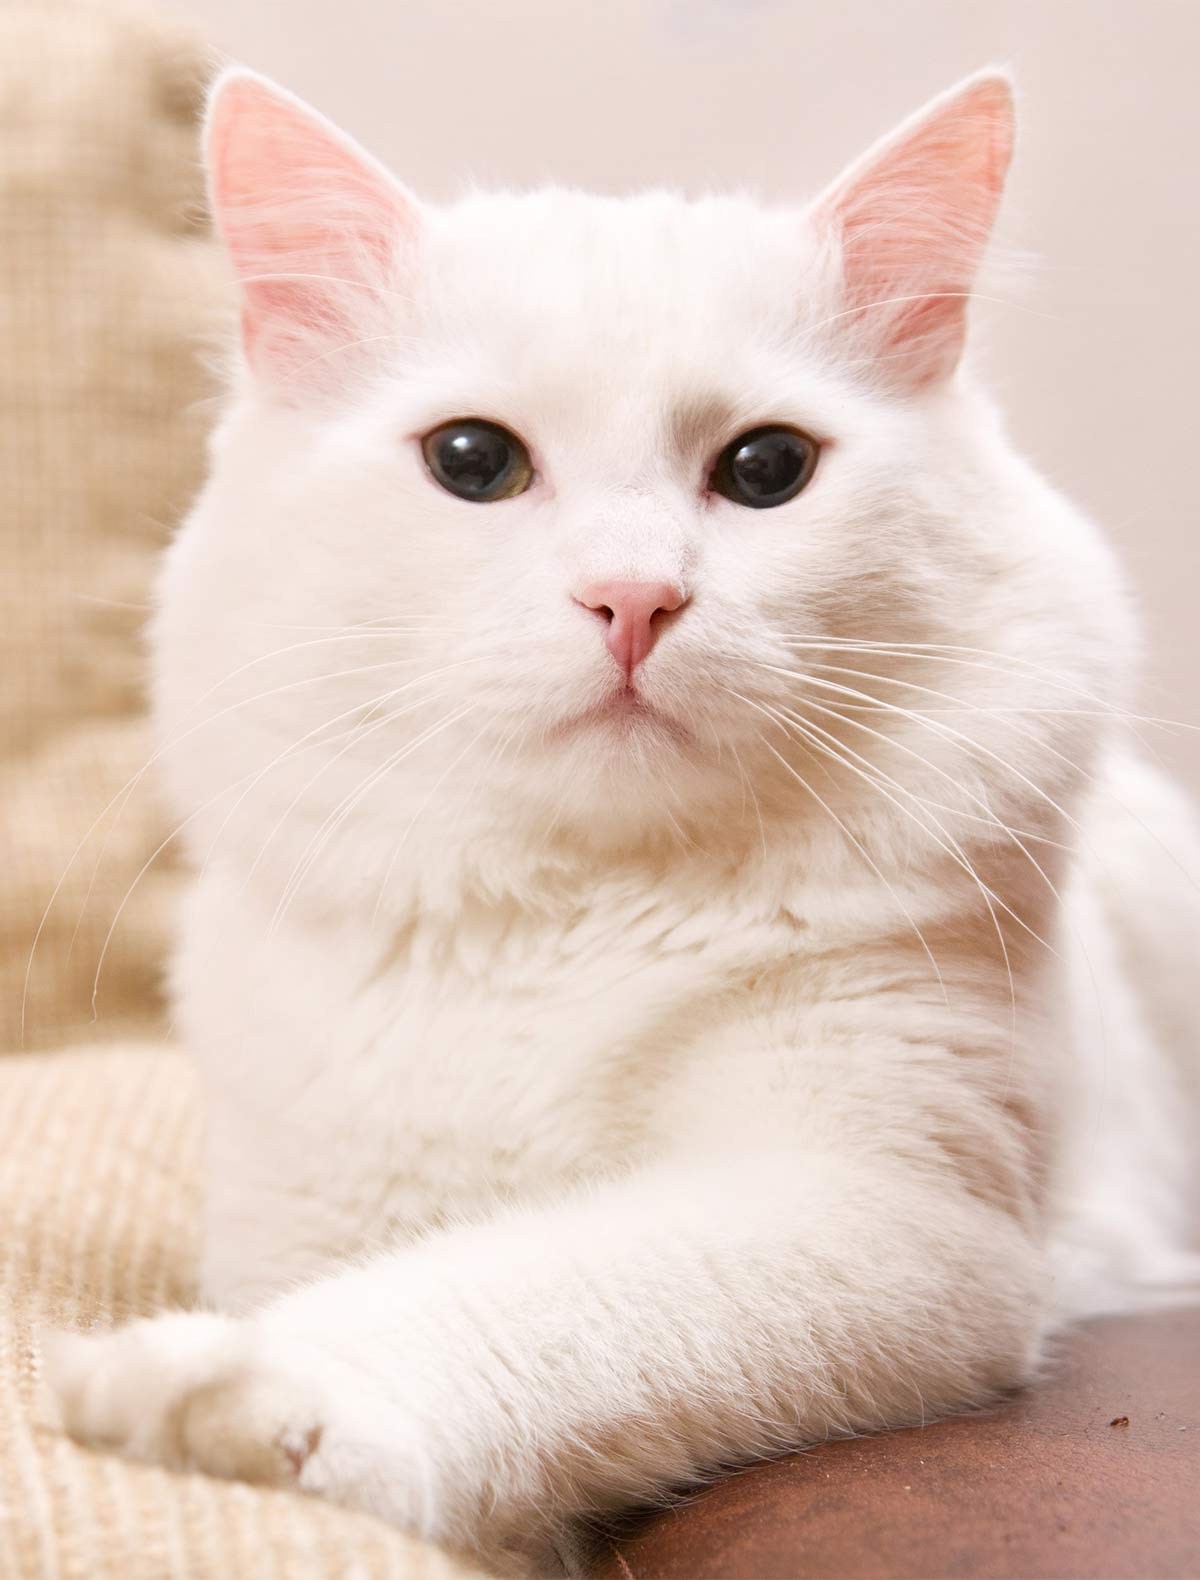 Порода турецкая ангора. Турецкая ангора кот. Белая ангорская кошка. Турецкая ангора белая. Турецкая ангора кот белый.